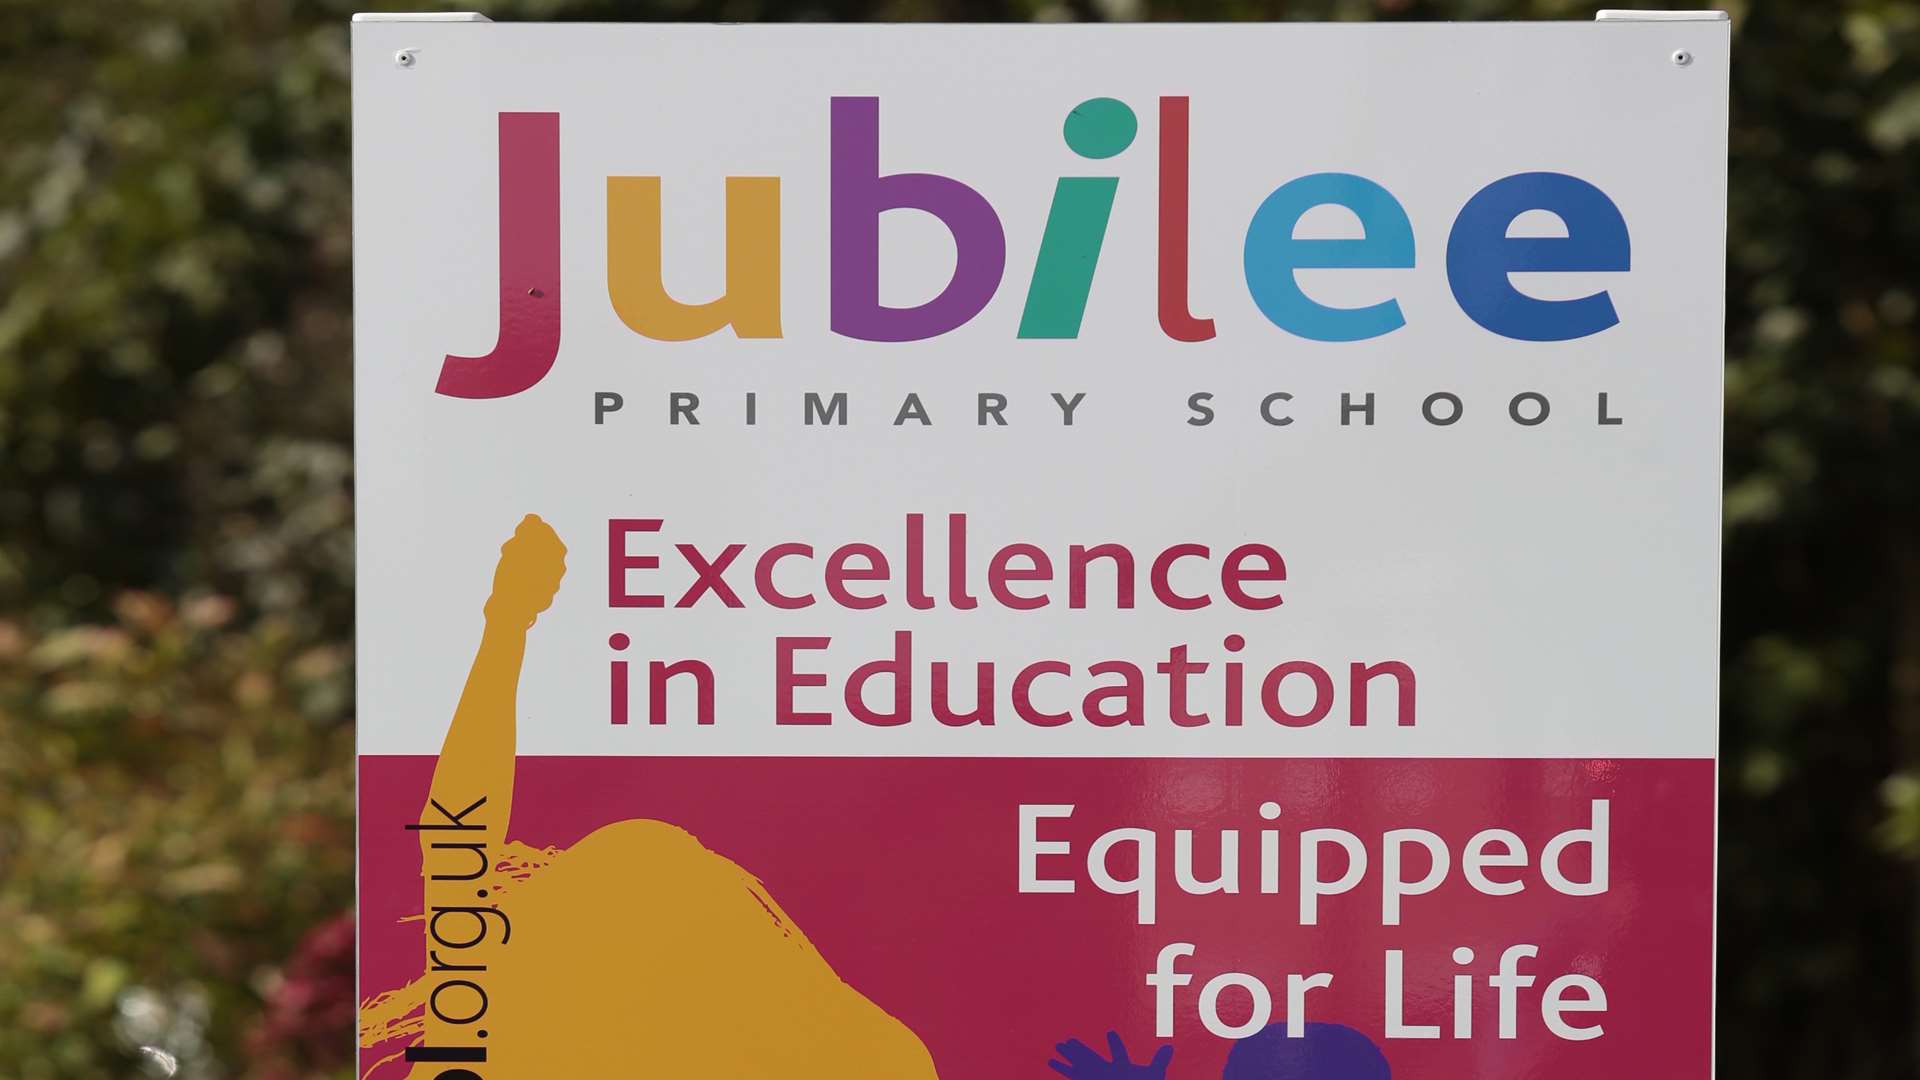 Jubilee Primary School opened in September 2014